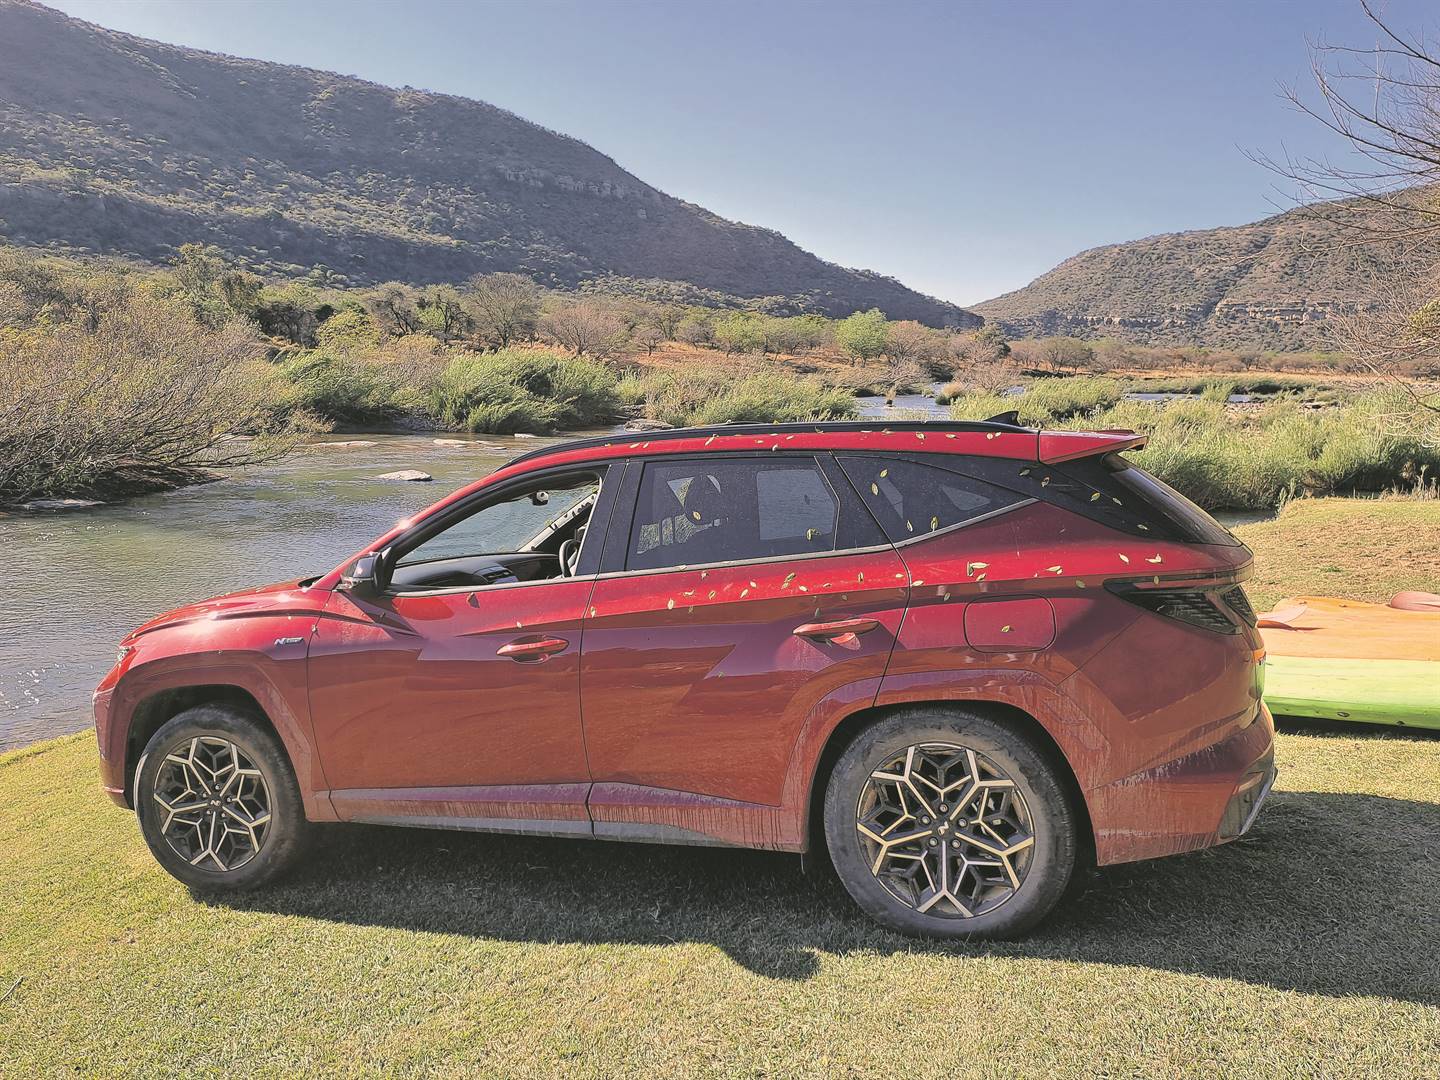 Futuristic new Hyundai Tucson goes on sale in SA